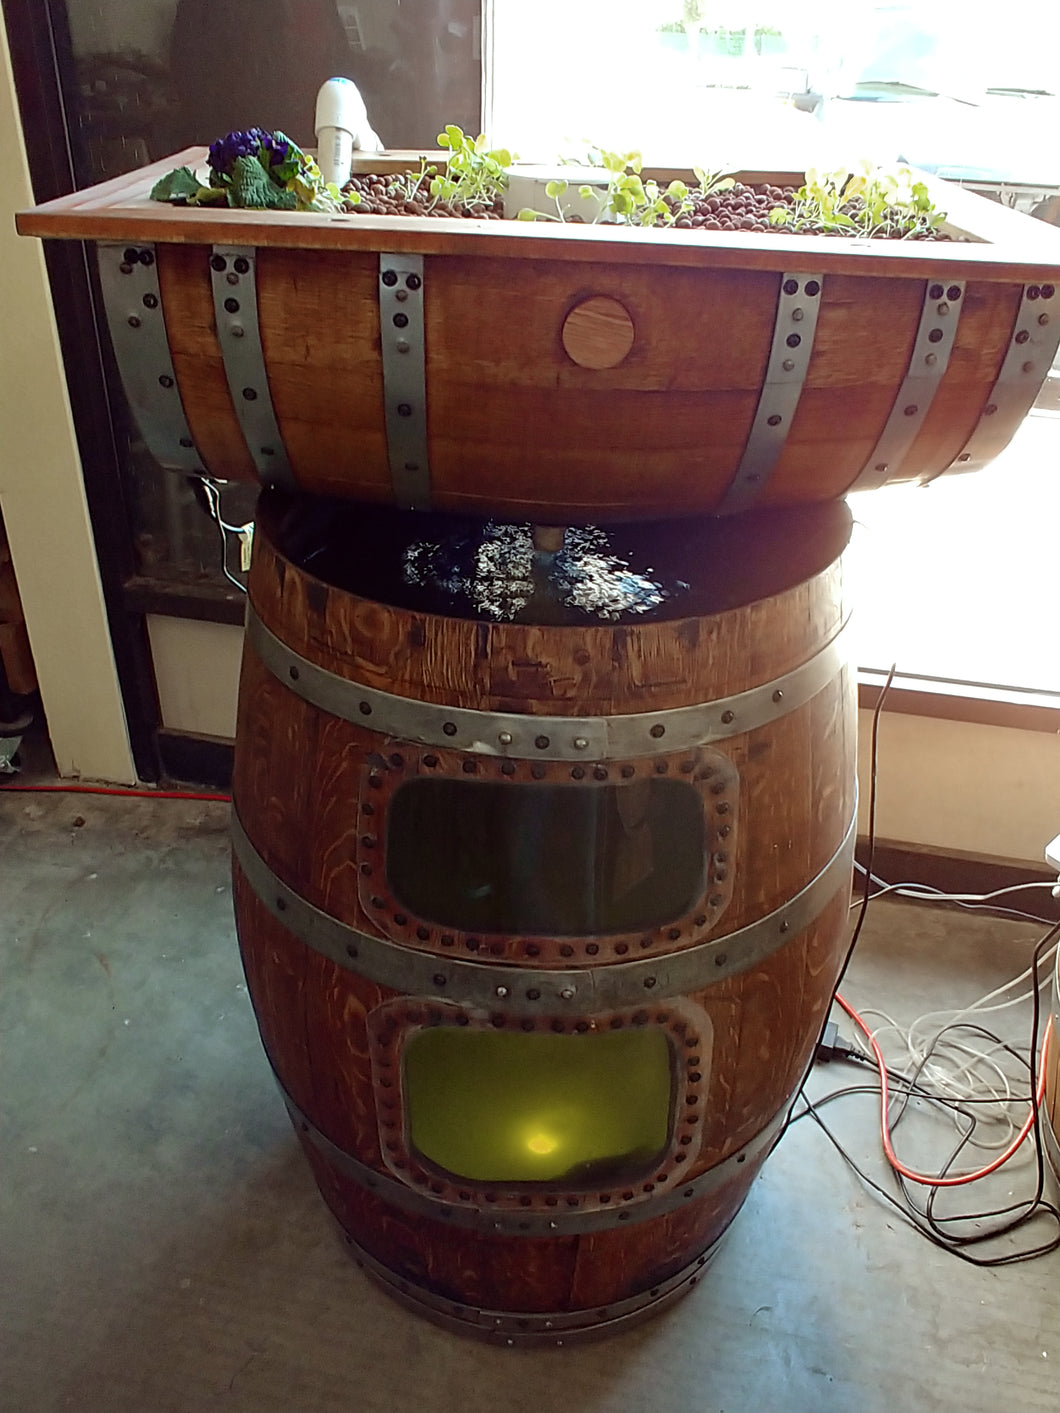 Basic Vertical Wine Barrel Aquaponics System with extra window